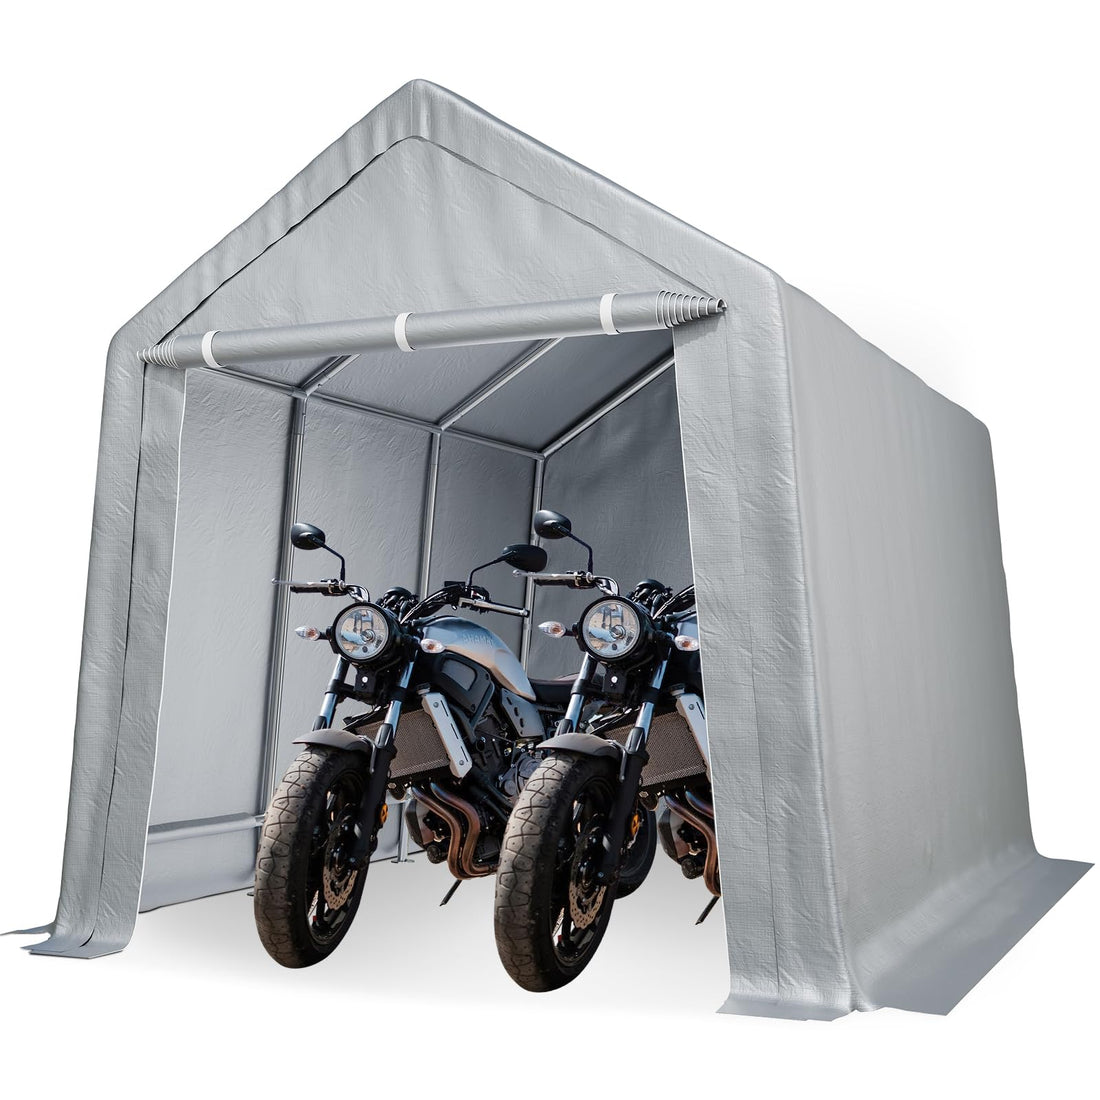 8x14FT Portable Shed Outdoor Storage Shelter, Metal Frame, Grey